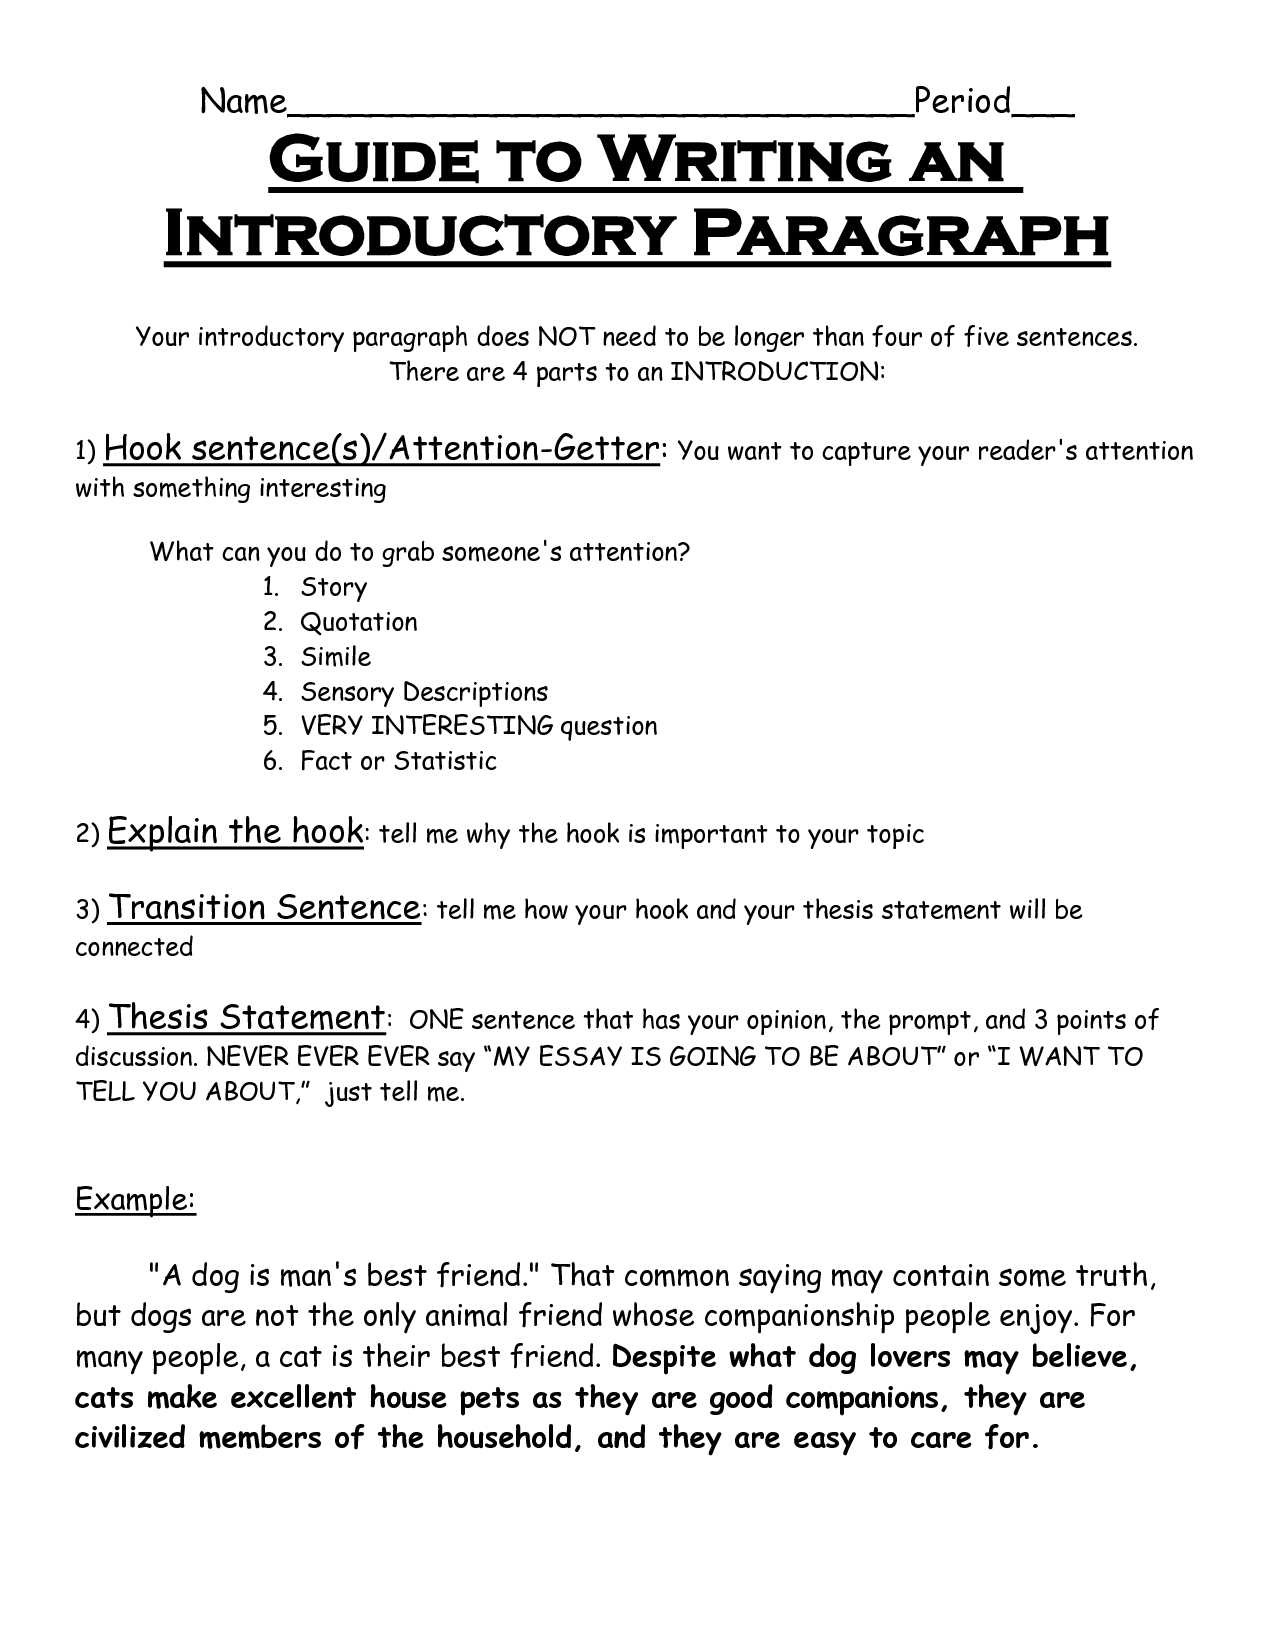 Essay Introduction Paragraph Image